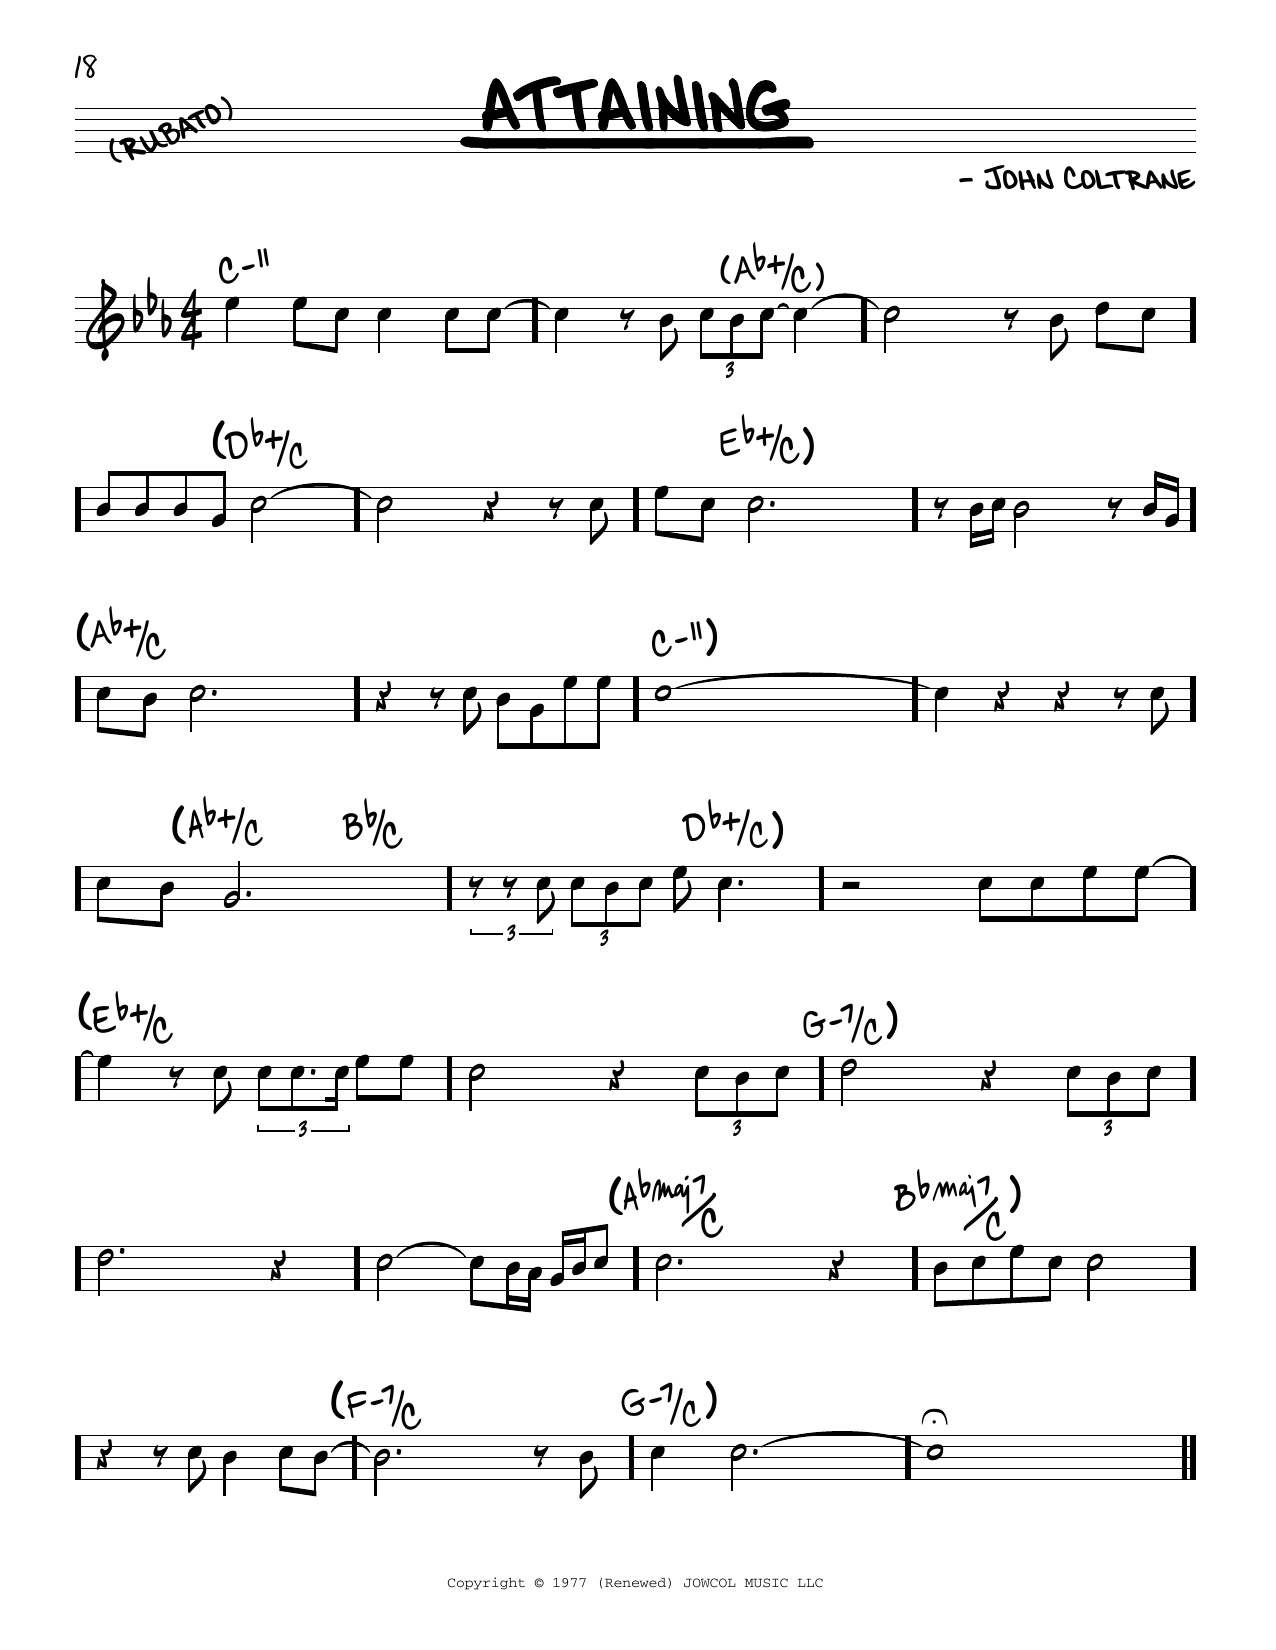 Download John Coltrane Attaining Sheet Music